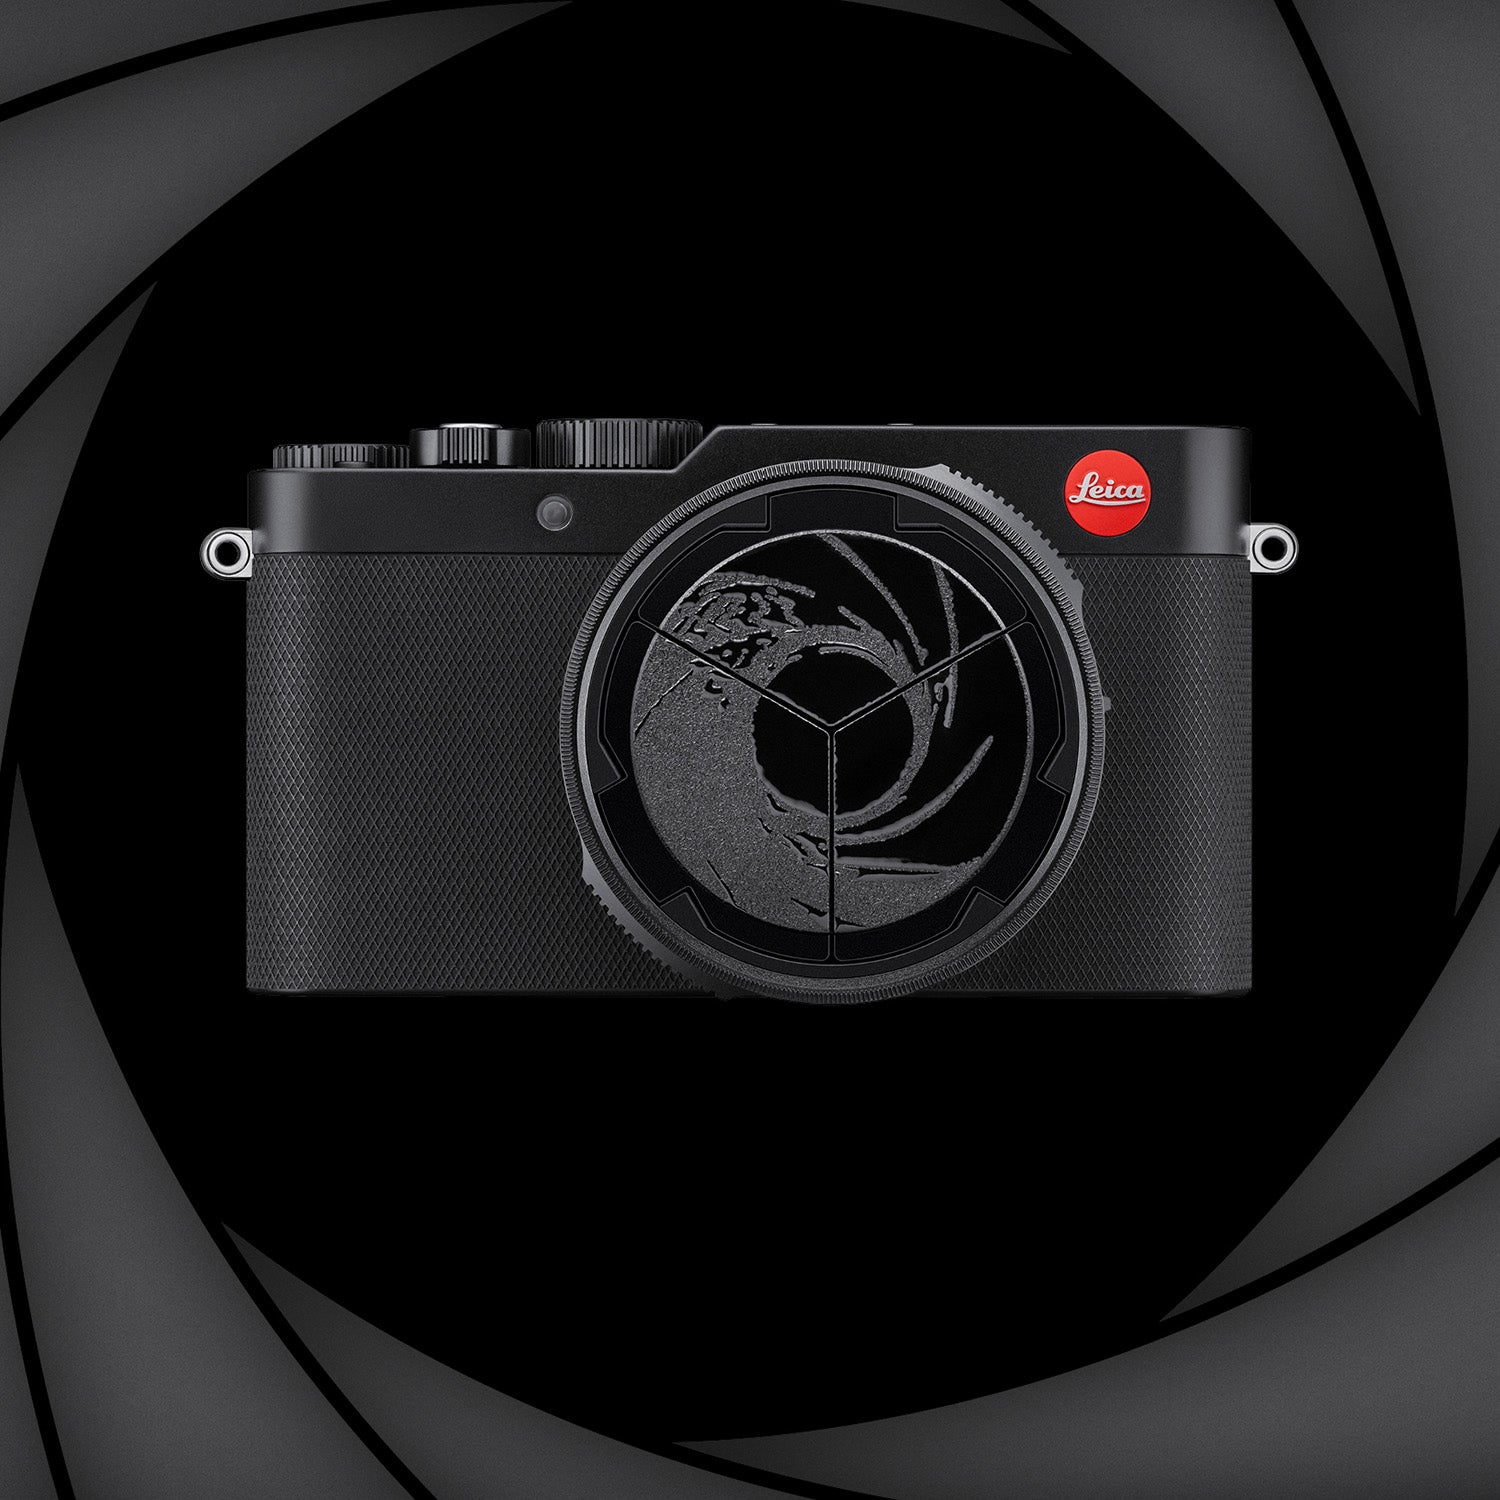 Leica's New 007 Edition Digital Camera Honors James Bond's Legacy